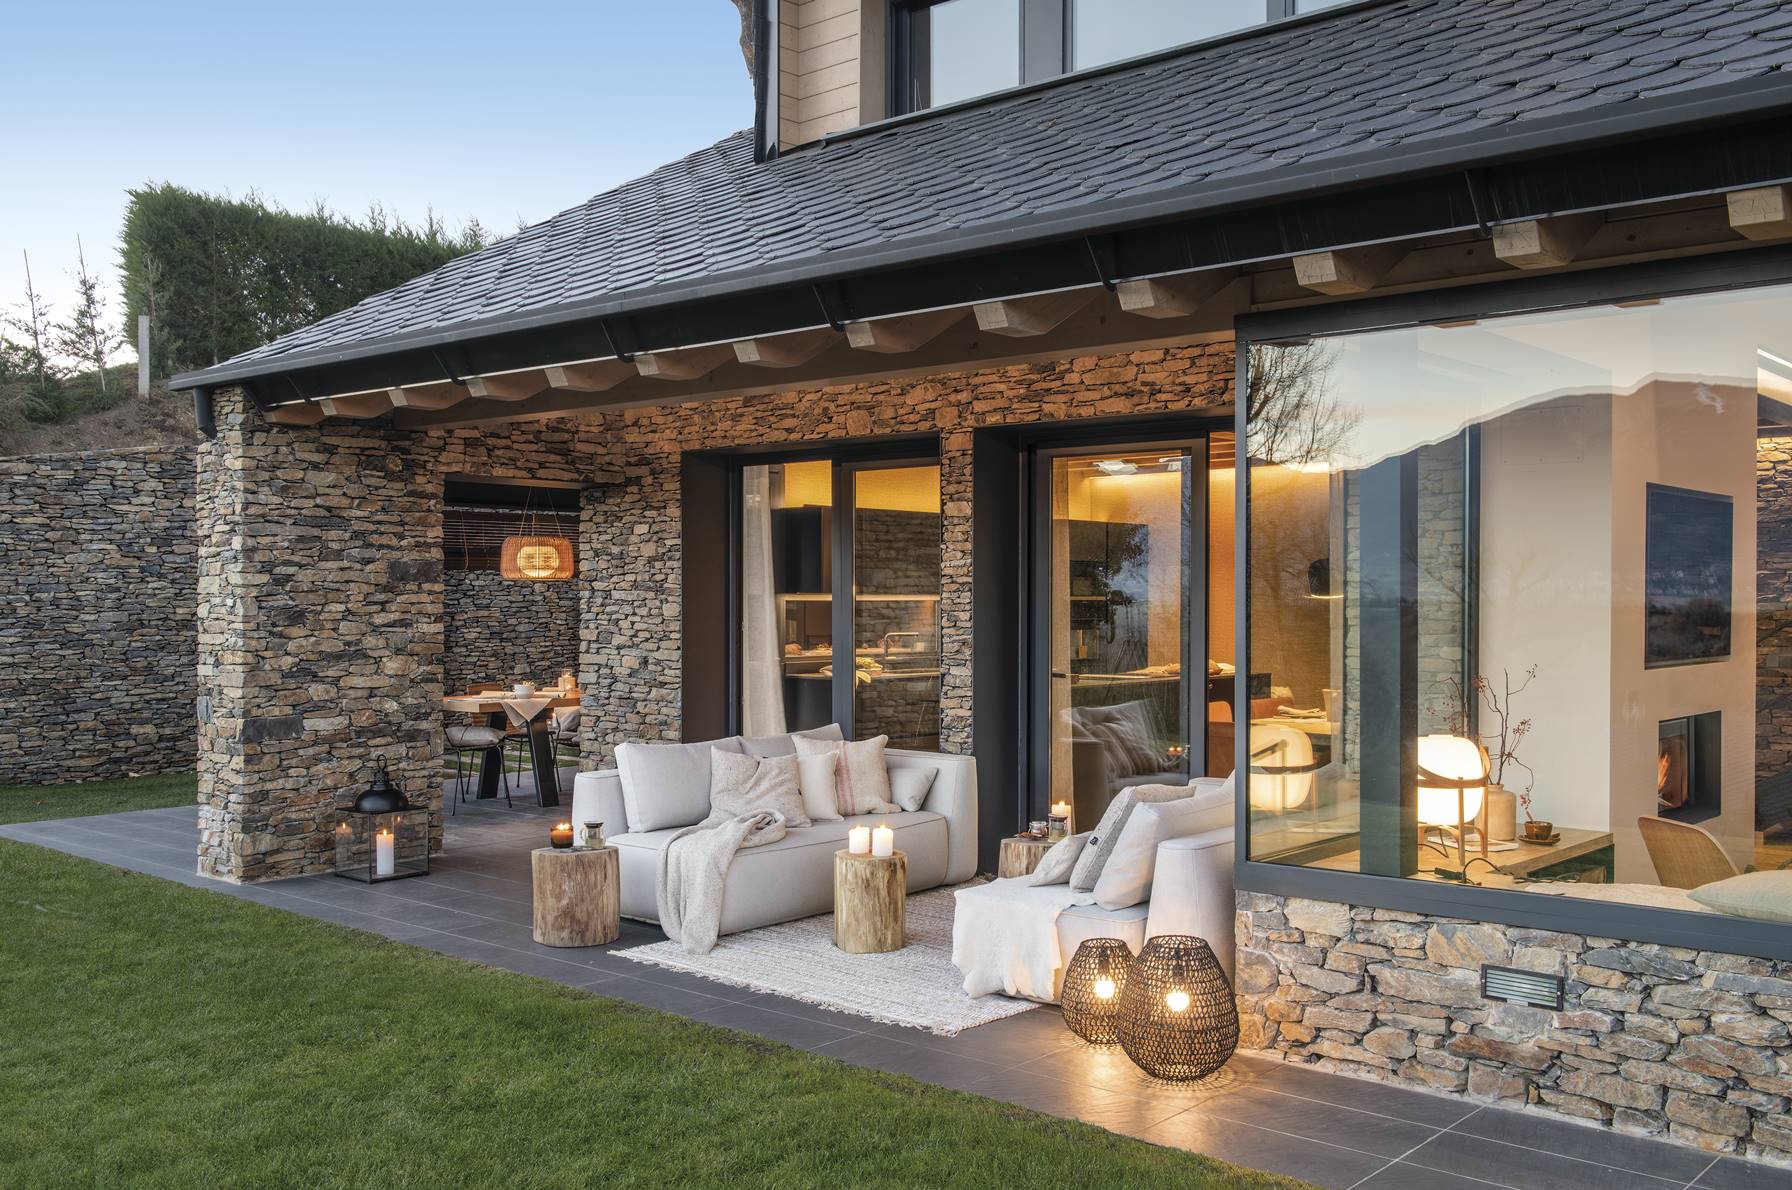 Fachada de casa rústica de piedra con porche iluminado.